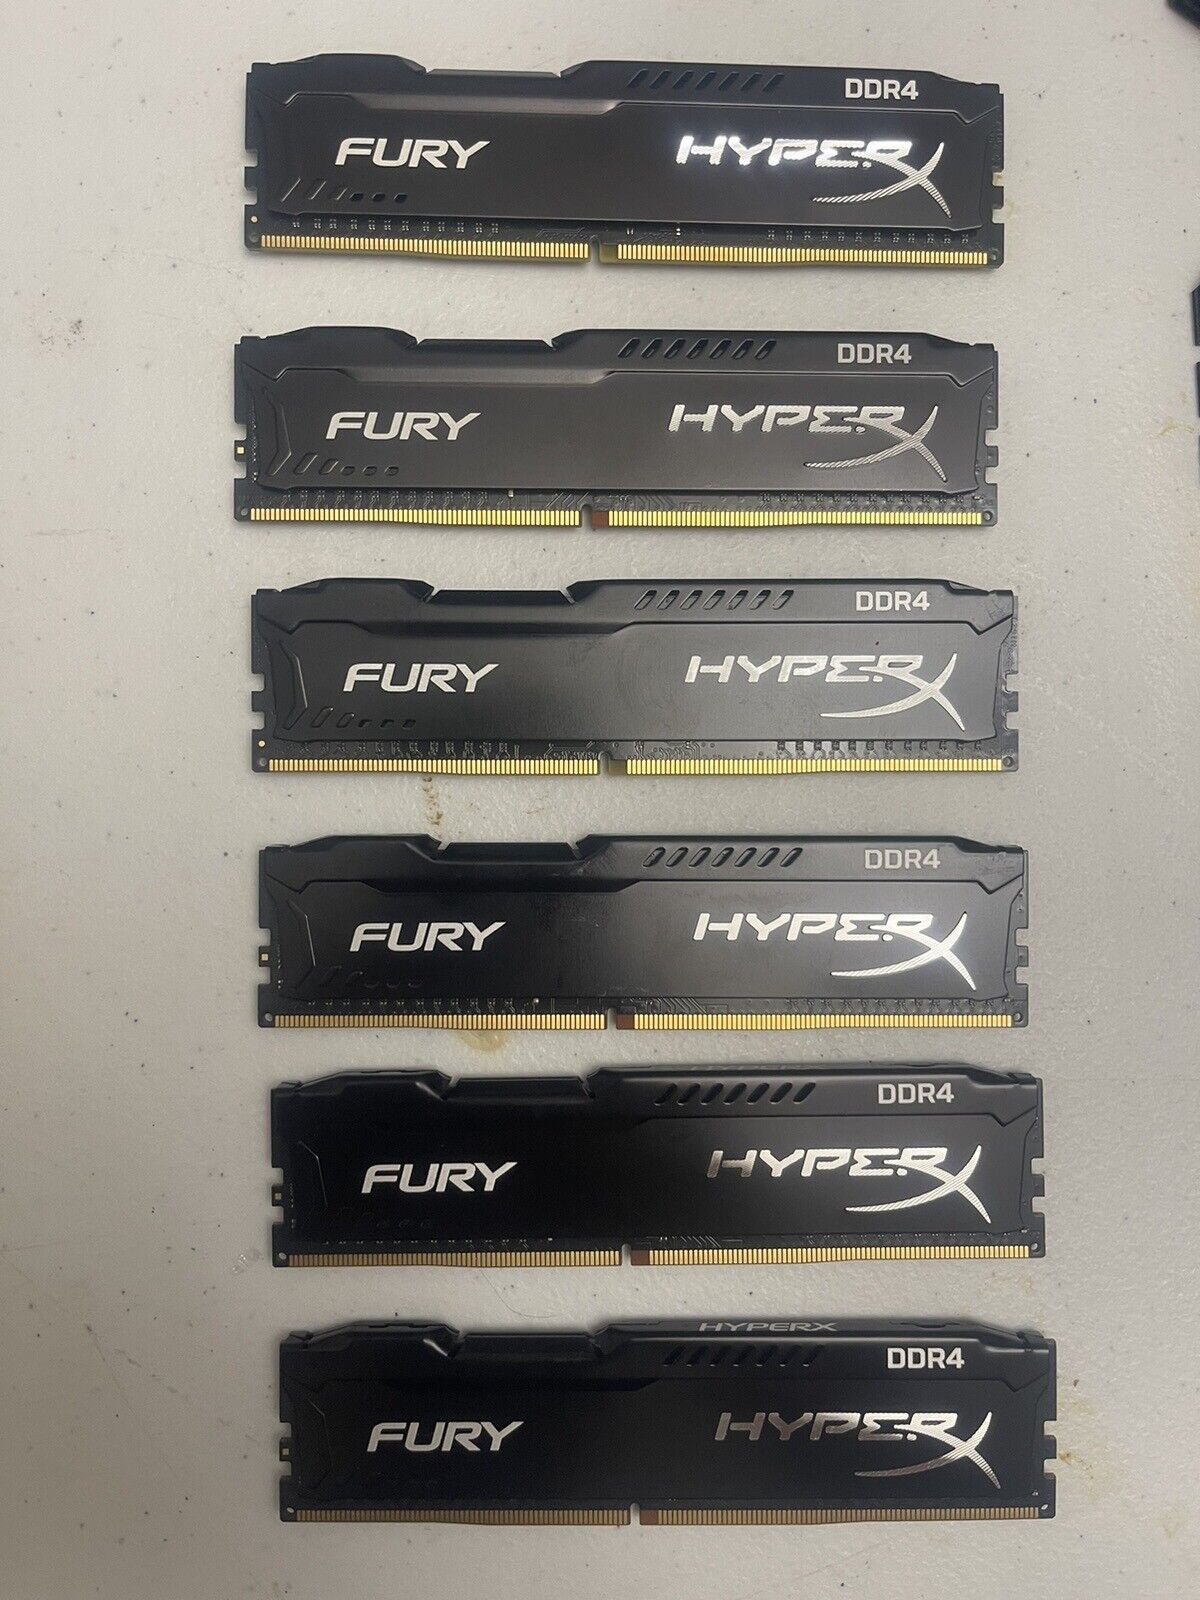 HyperX FURY DDR4 48GB (6x8GB) 3200MHz PC4-25600 Desktop RAM Memory.